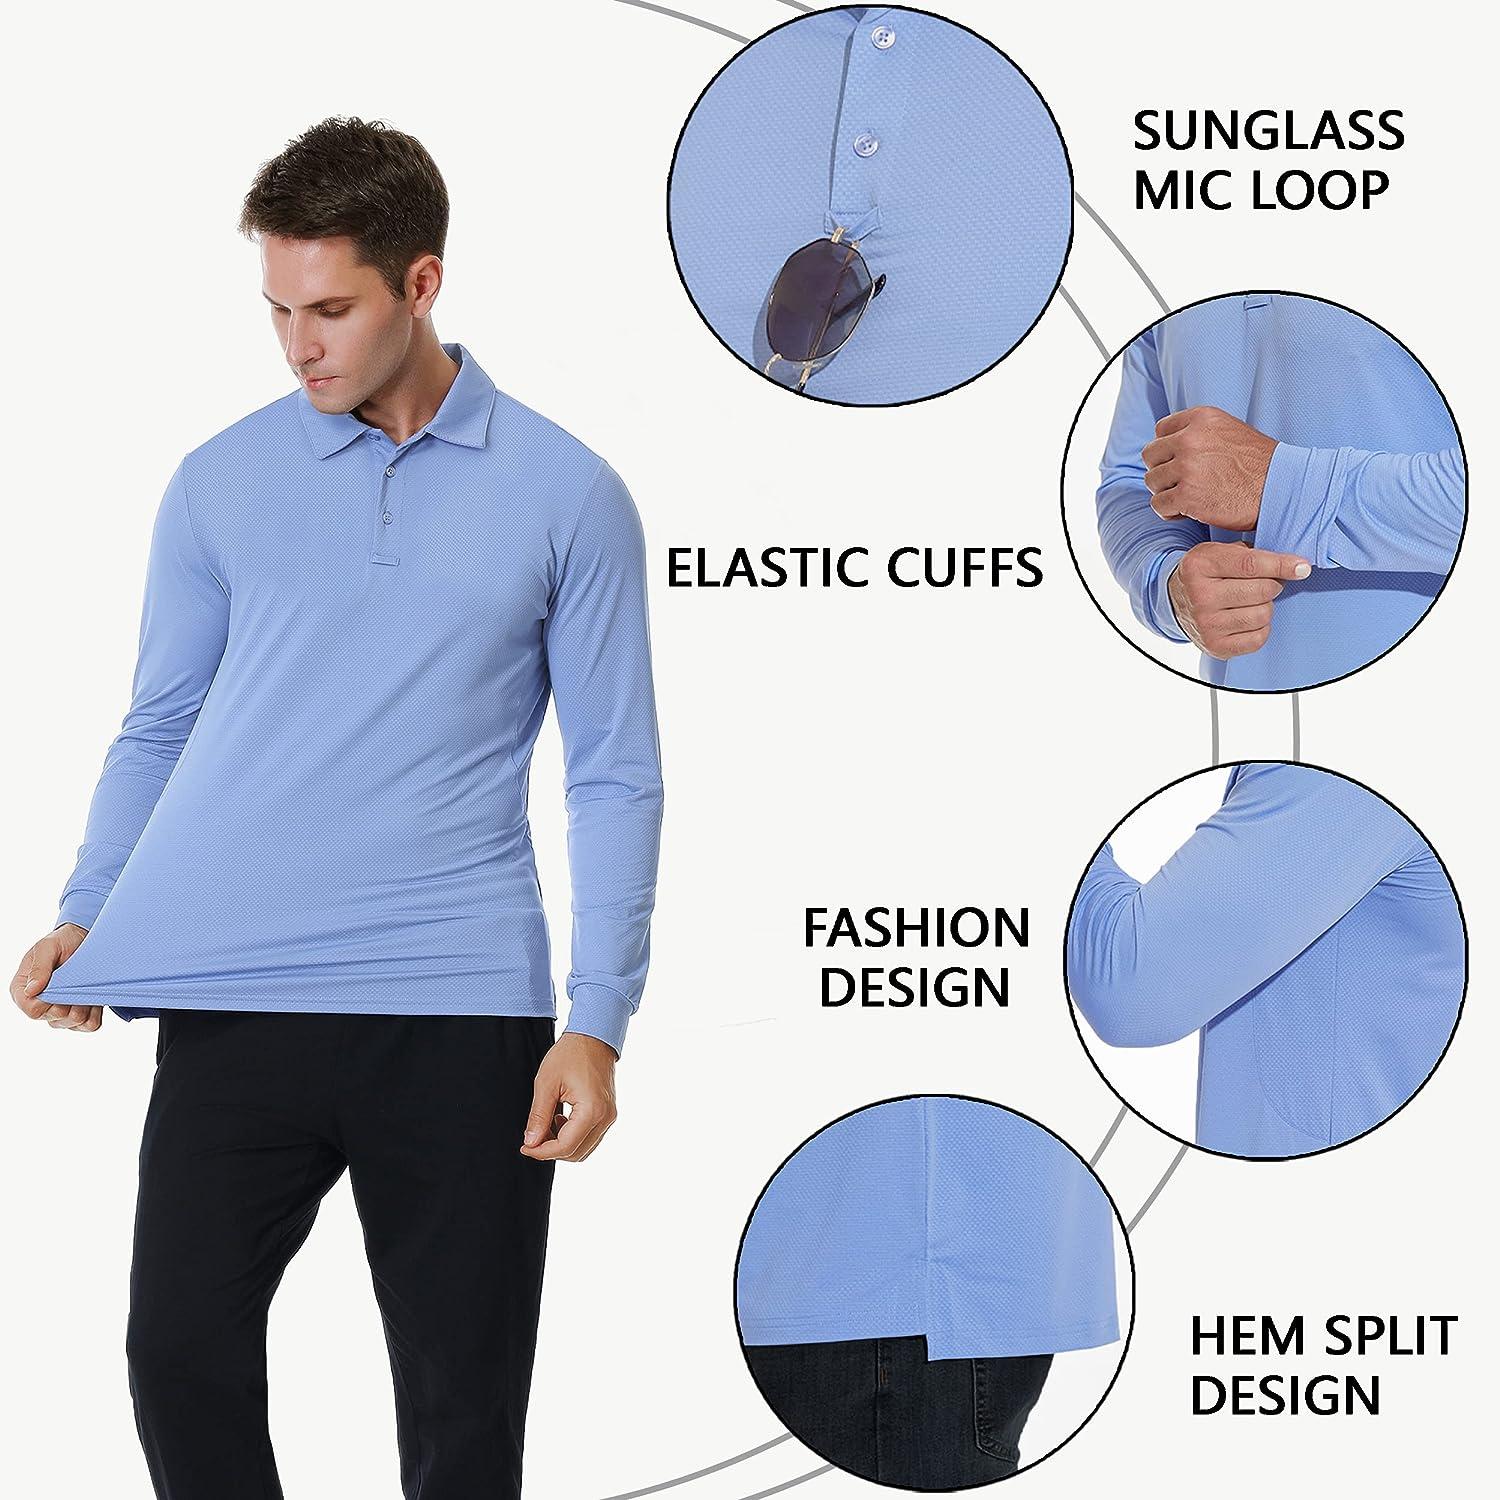 JIM LEAGUE Men's Golf Shirts Polo Quick Dry Lightweight Performance Short &  Long Sleeve Athletic Tennis Collar Shirts UPF50 07-long Sleeve-blue Large